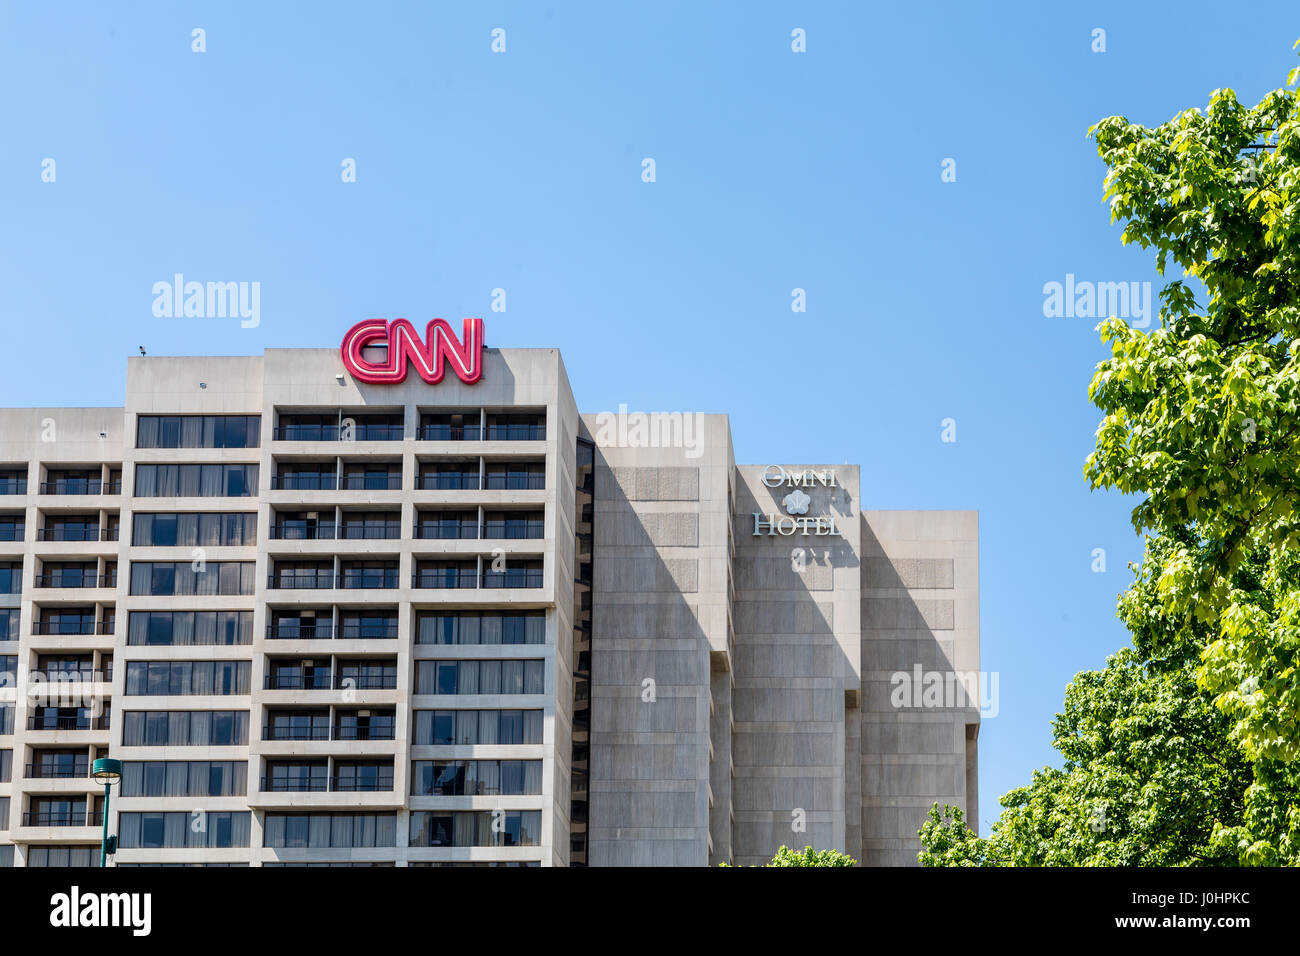 CNN and Omni Hotel Stock Photo